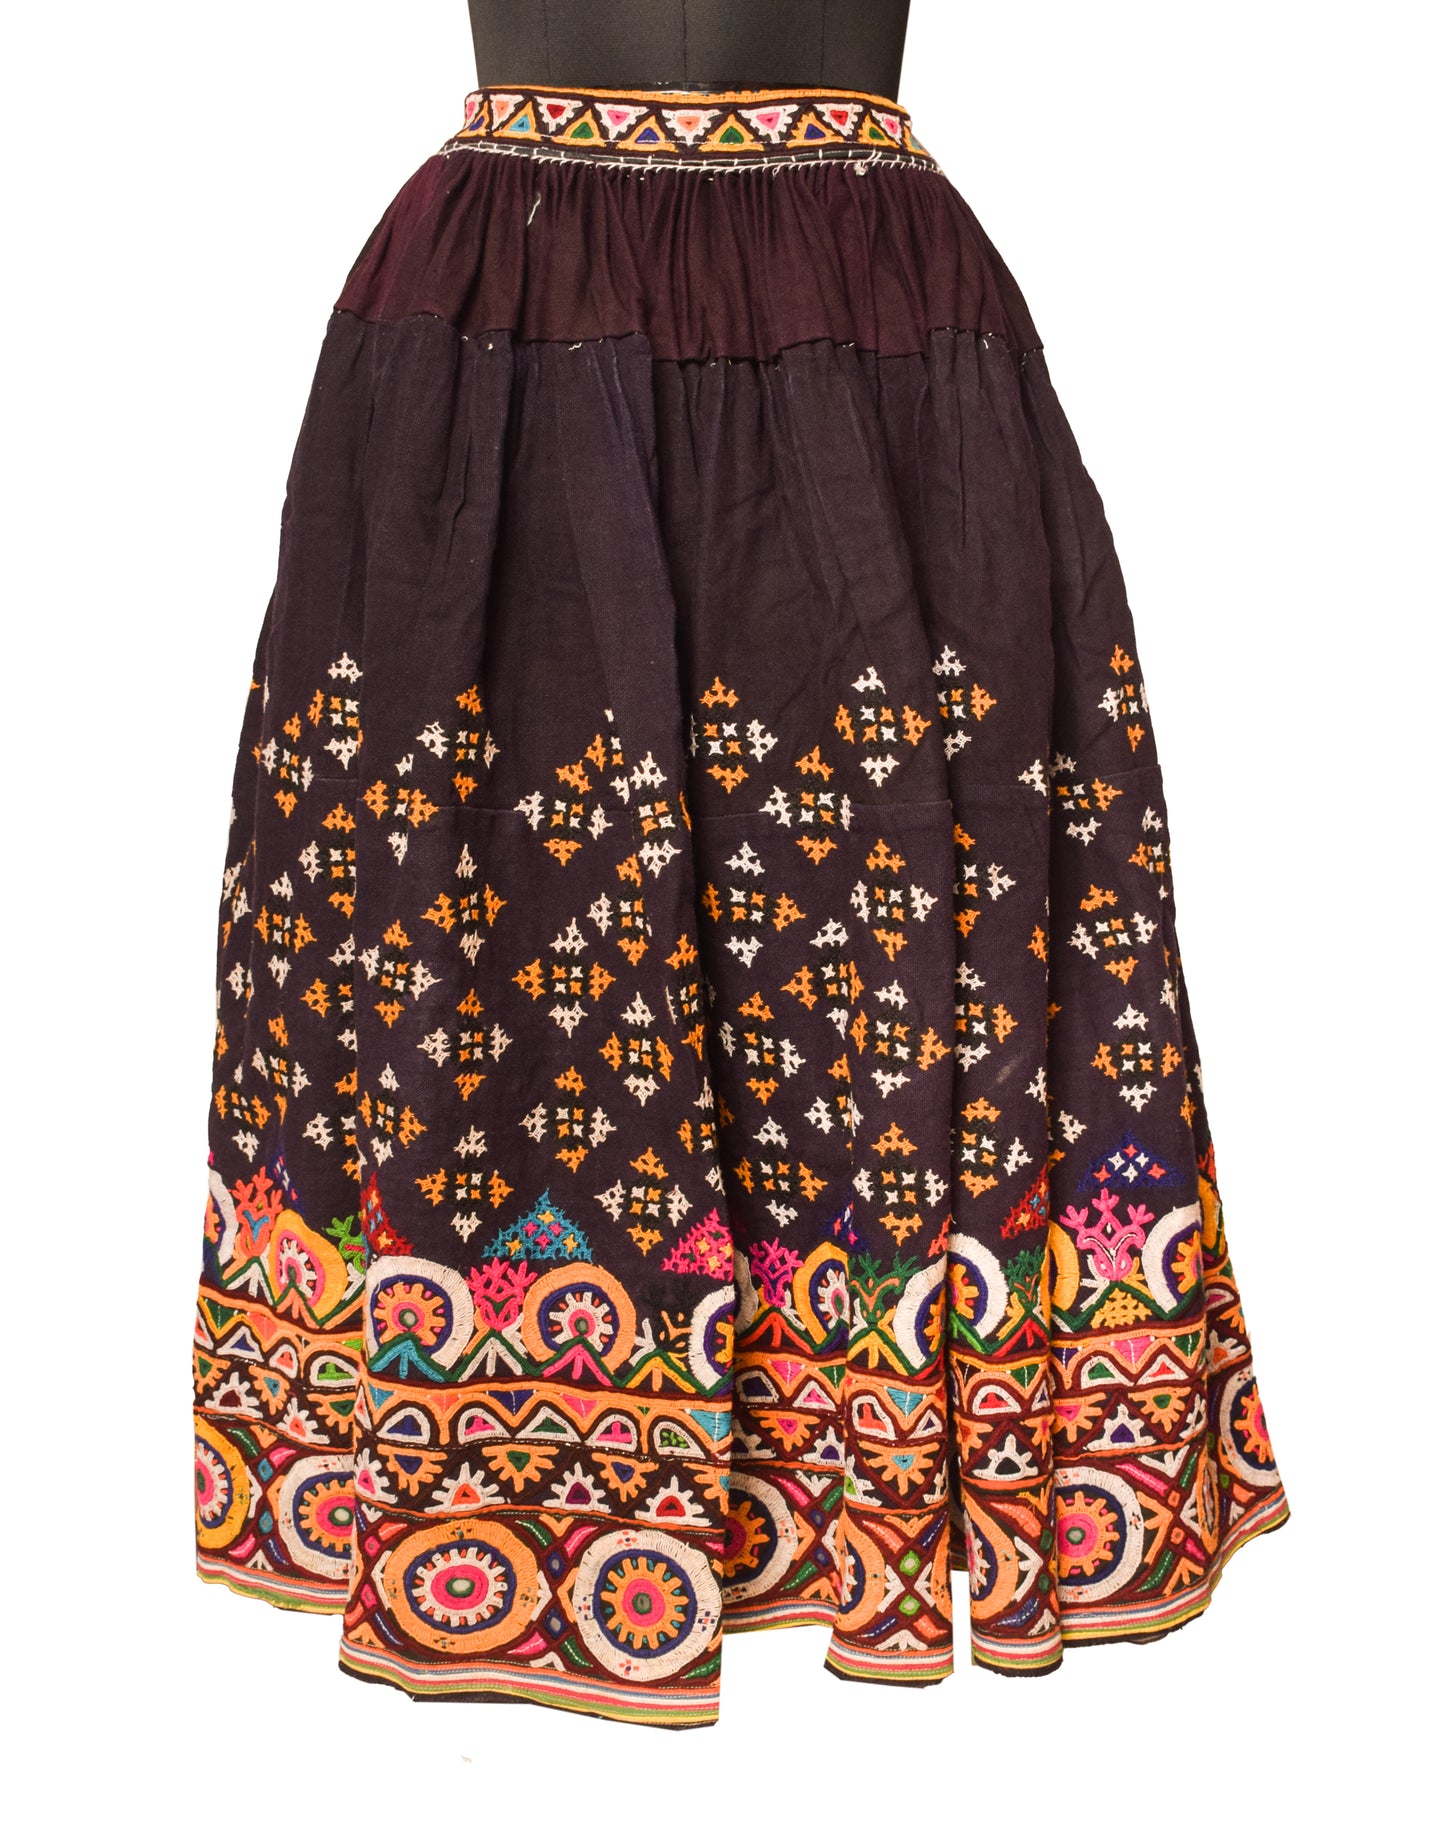 Bavalia Work Cotton Hand Embroidered Garba Skirt   - 3 Mtr Flare (Gher)    -  SKU : SD09803A